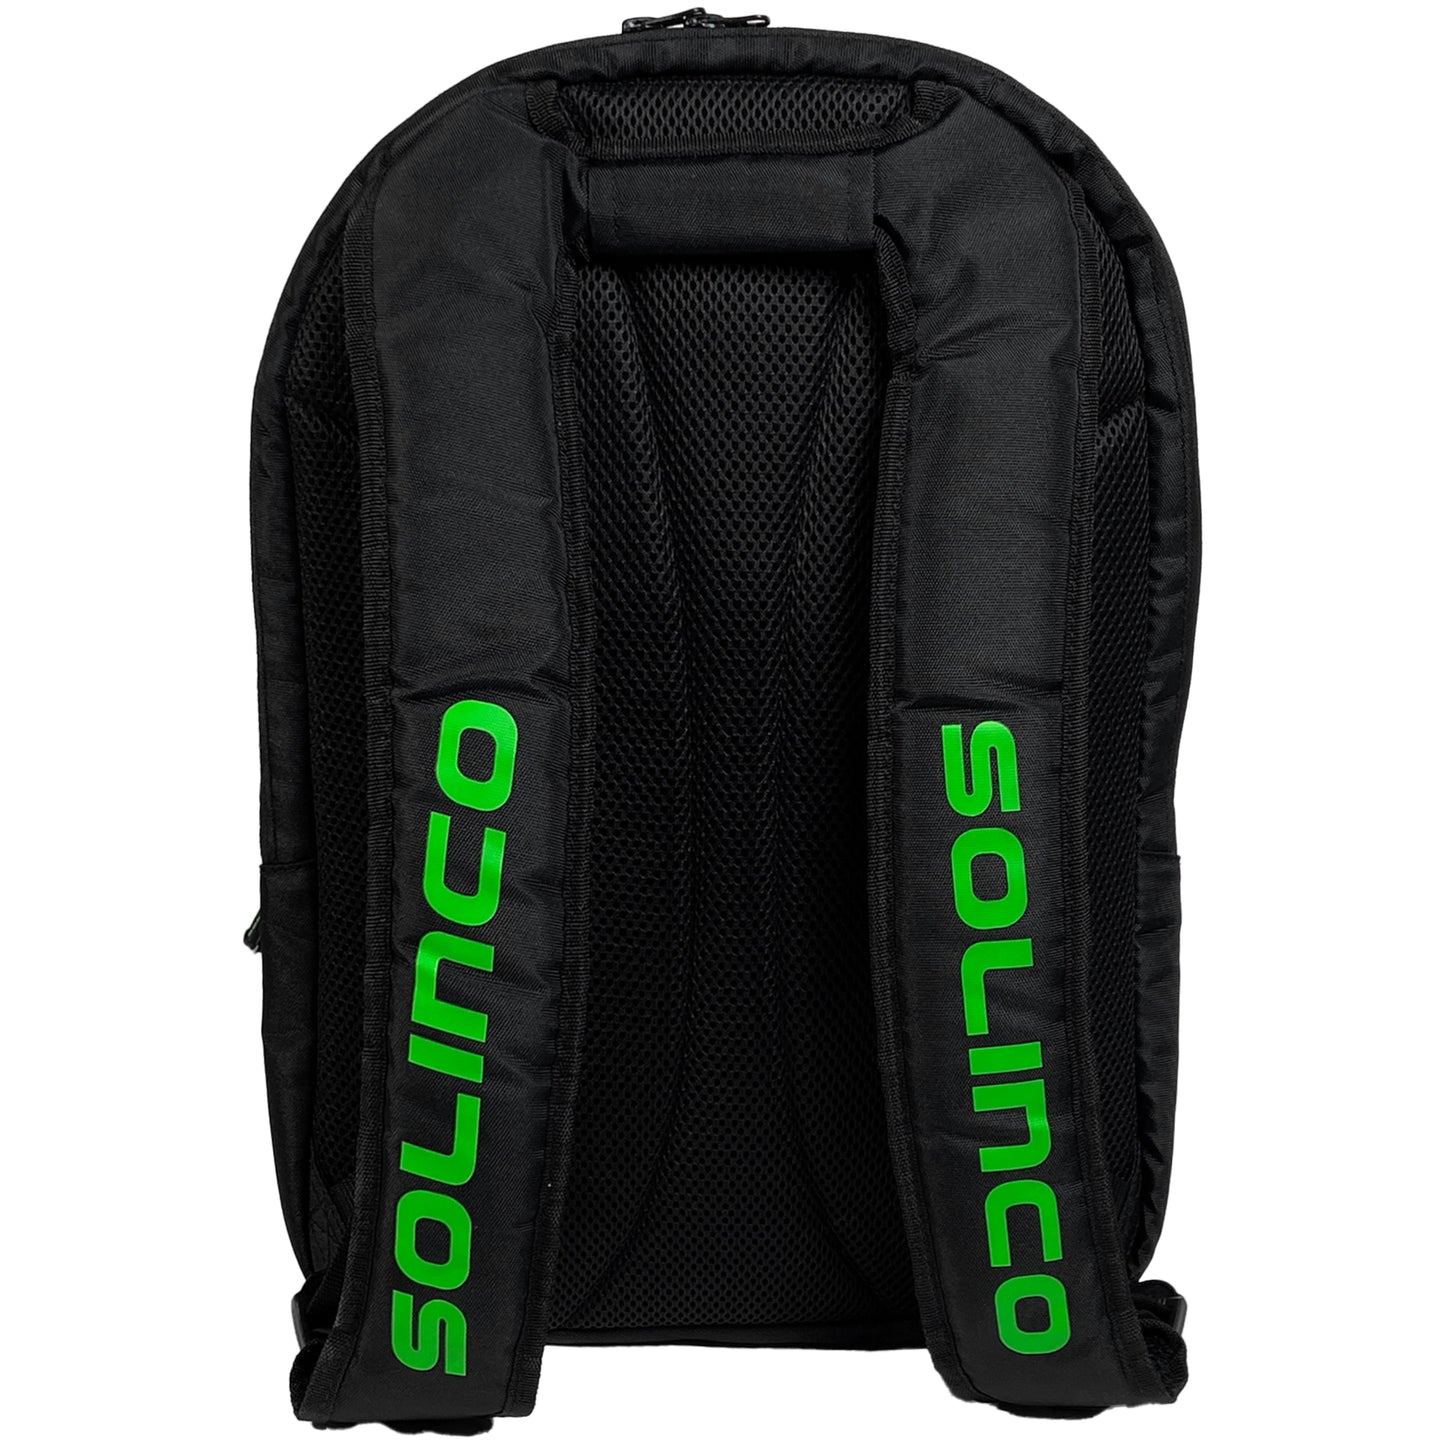 Solinco Tour Backpack Black/Green